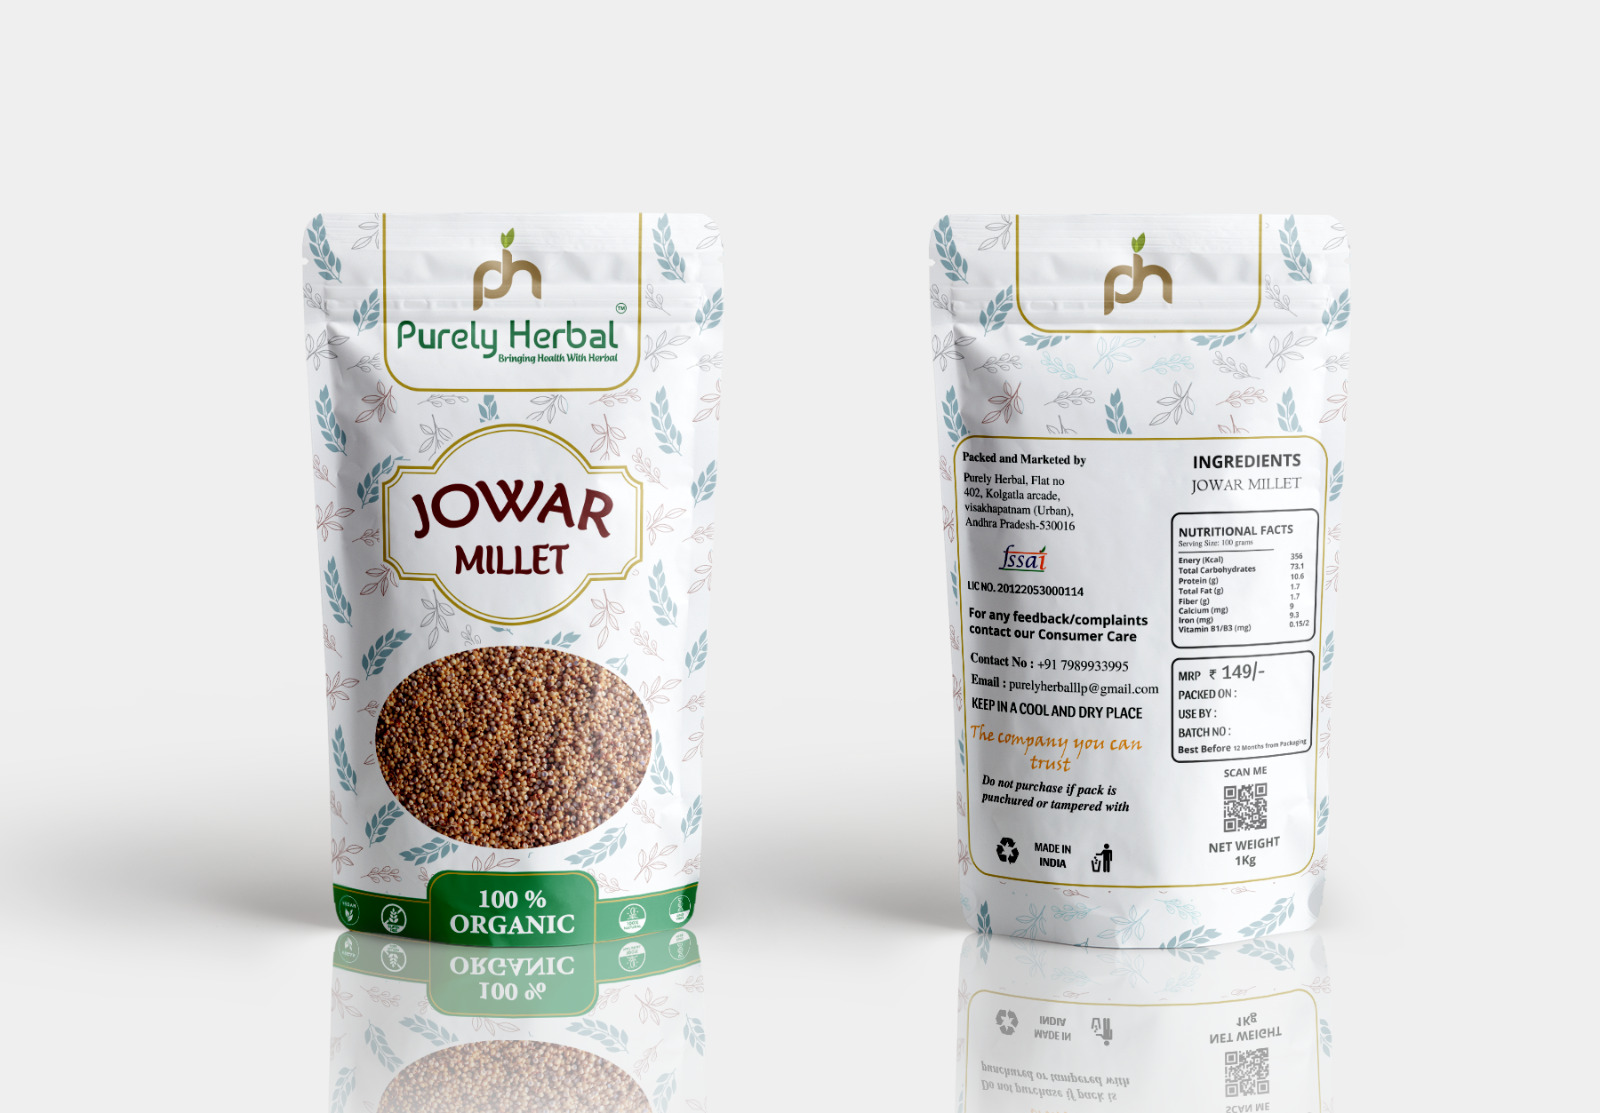 Purely Herbal Jower Millets